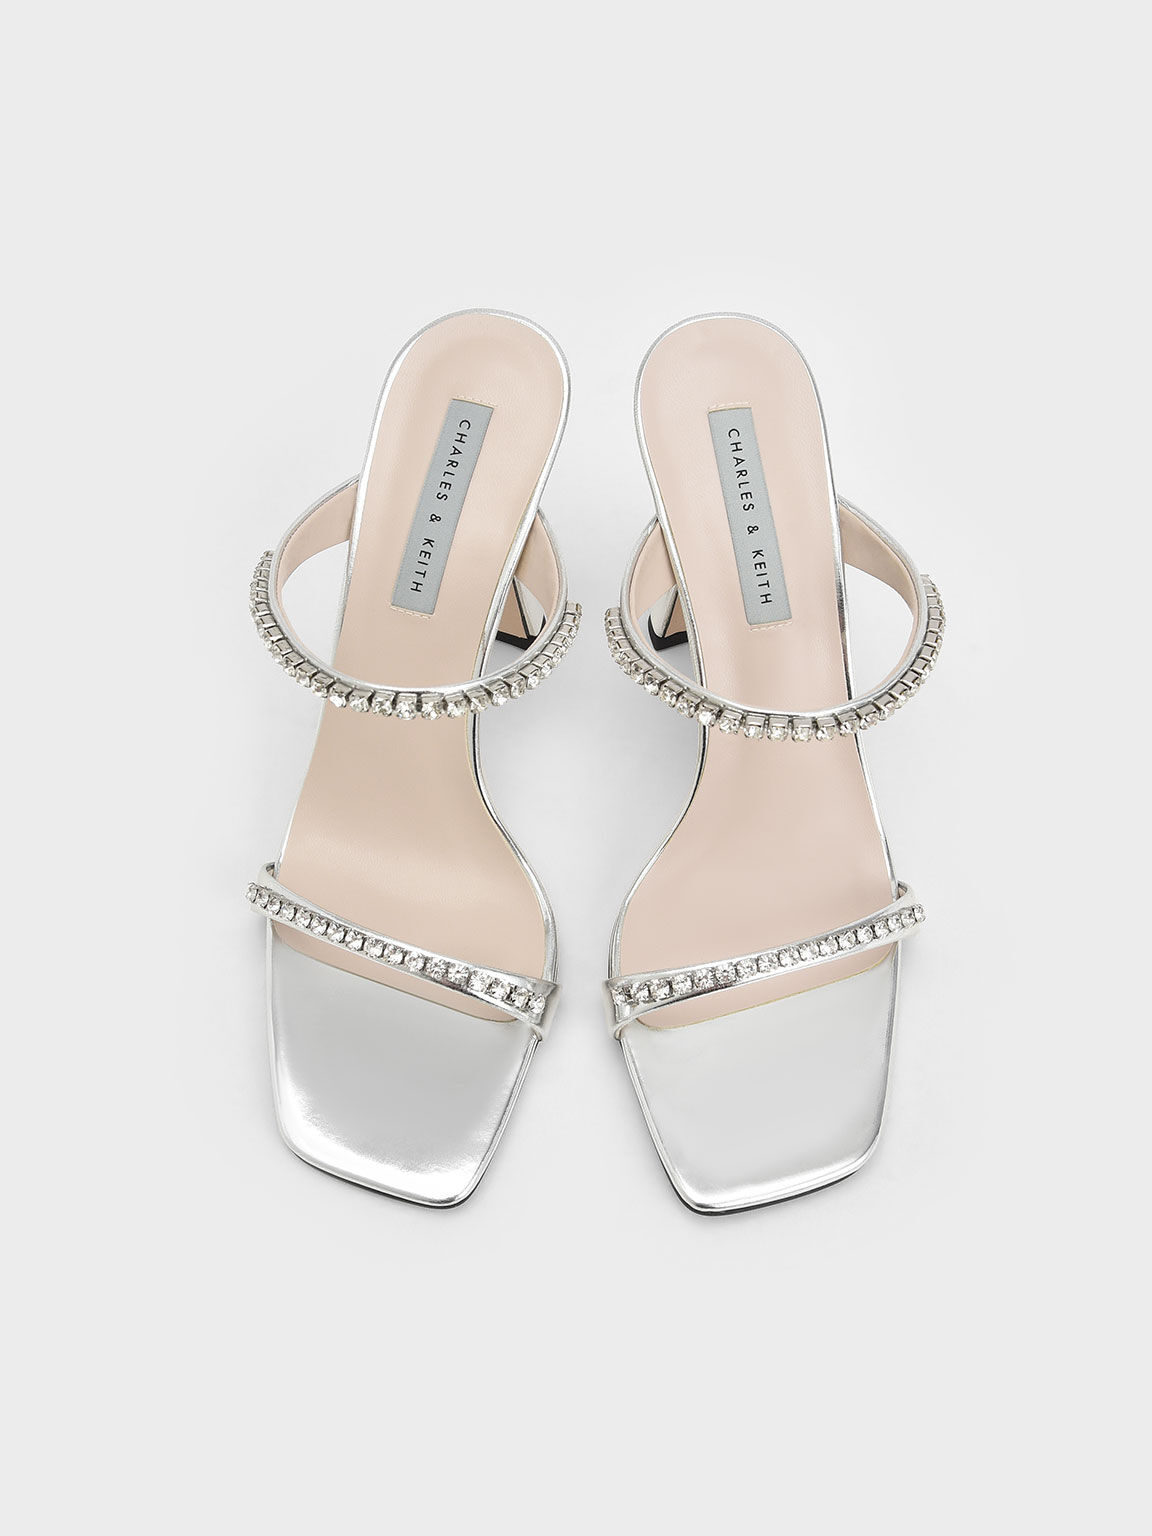 Metallic Gem-Encrusted Heeled Sandals, Silver, hi-res